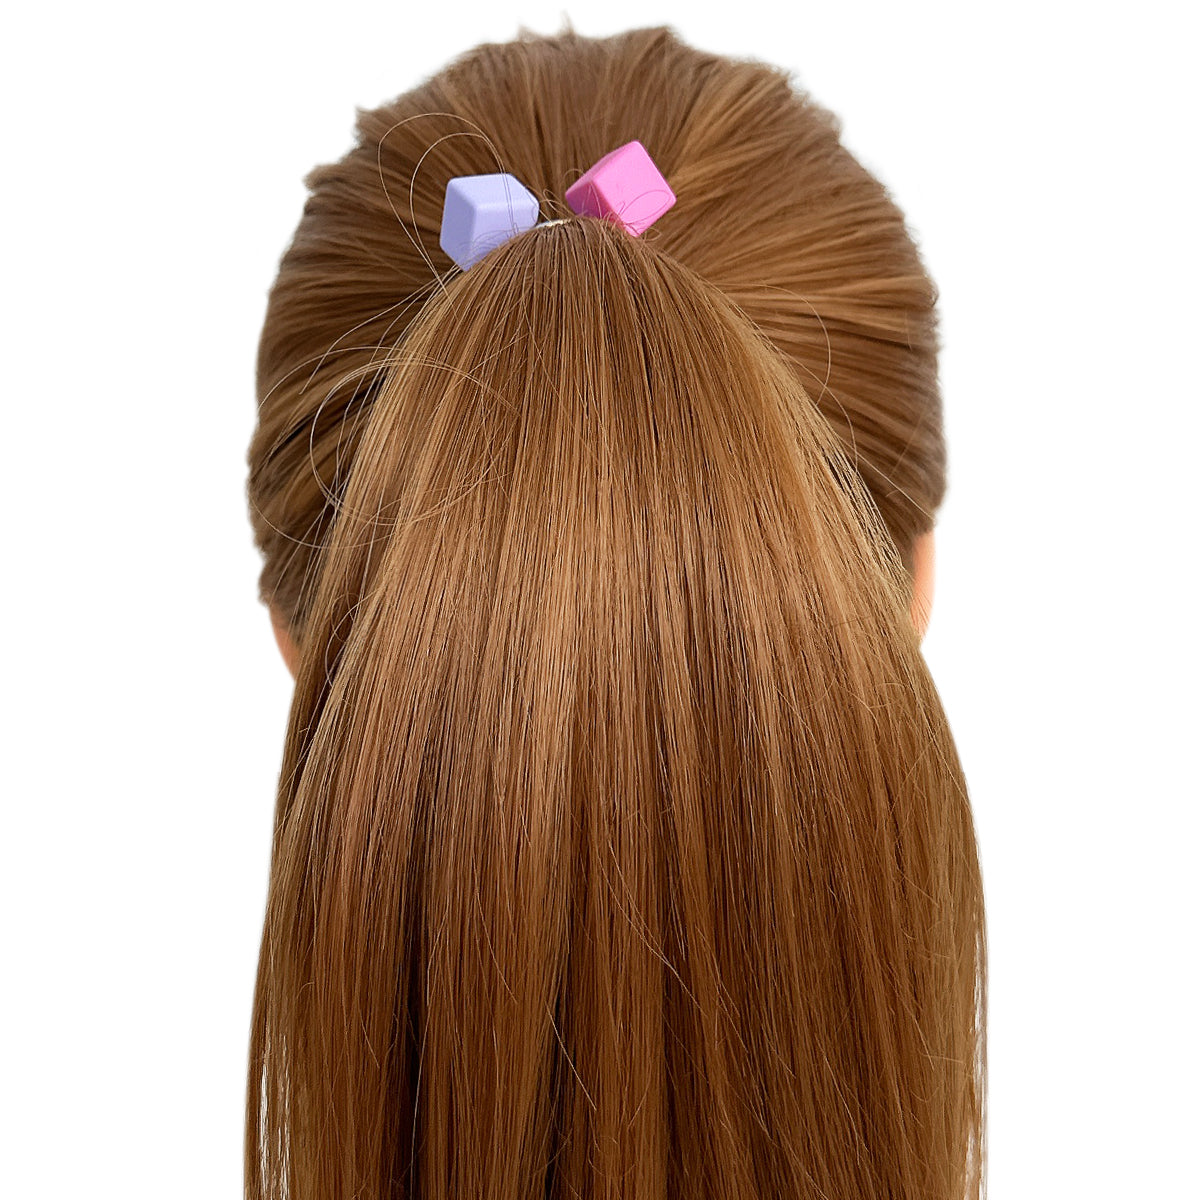 Exquisite Sparkling Acrylic Cube Hair Rope Hair Tie Cute Hair